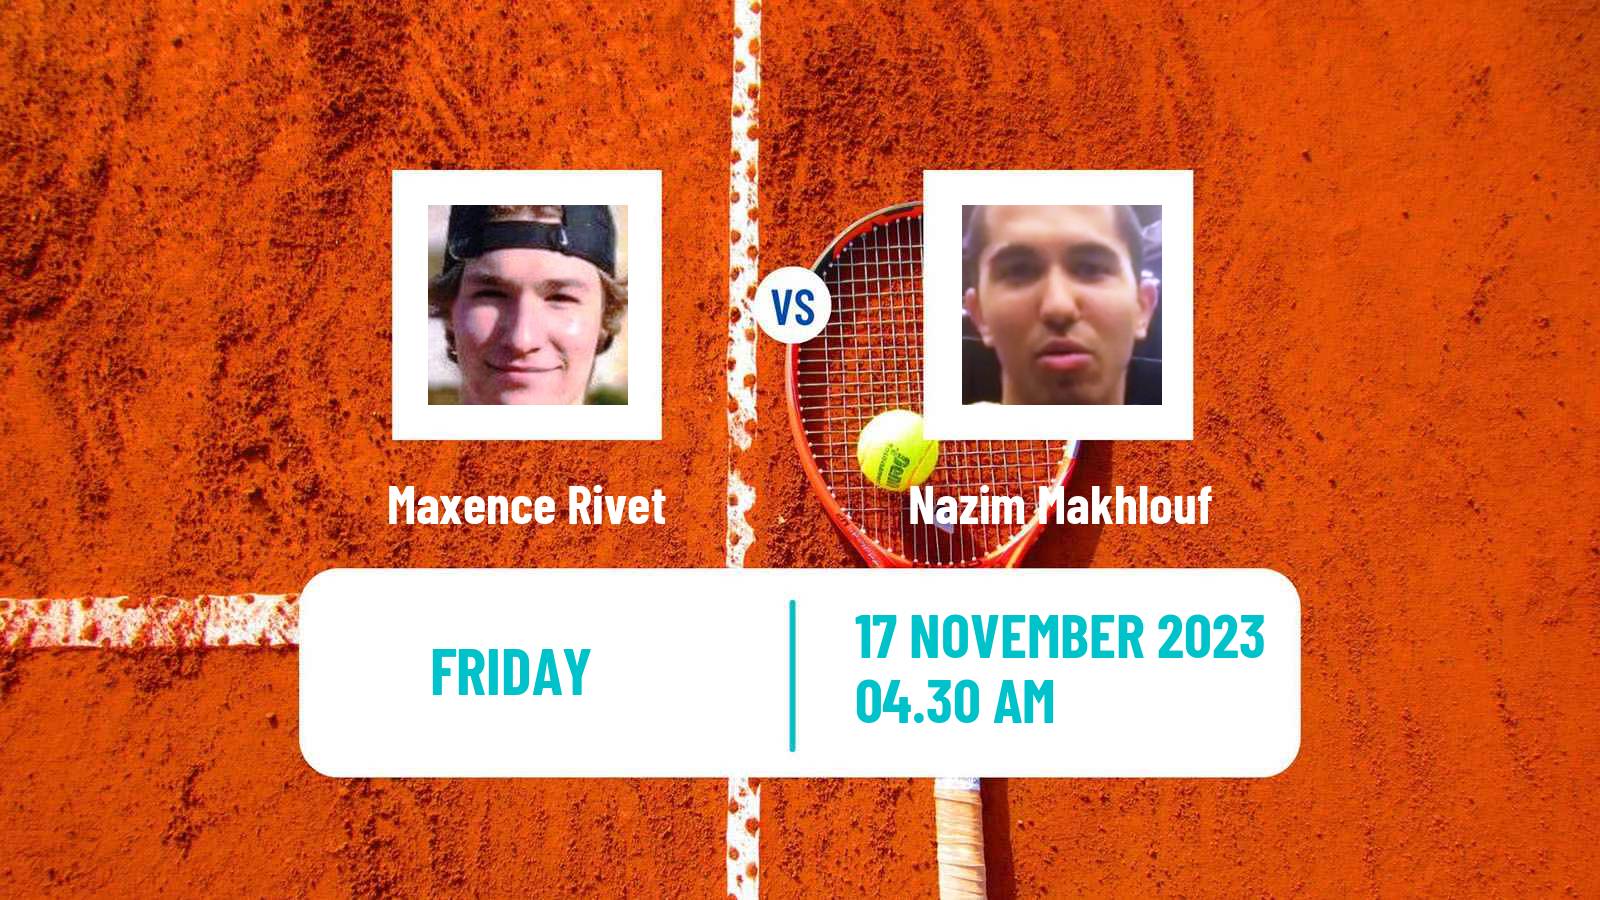 Tennis ITF M15 Monastir 46 Men Maxence Rivet - Nazim Makhlouf